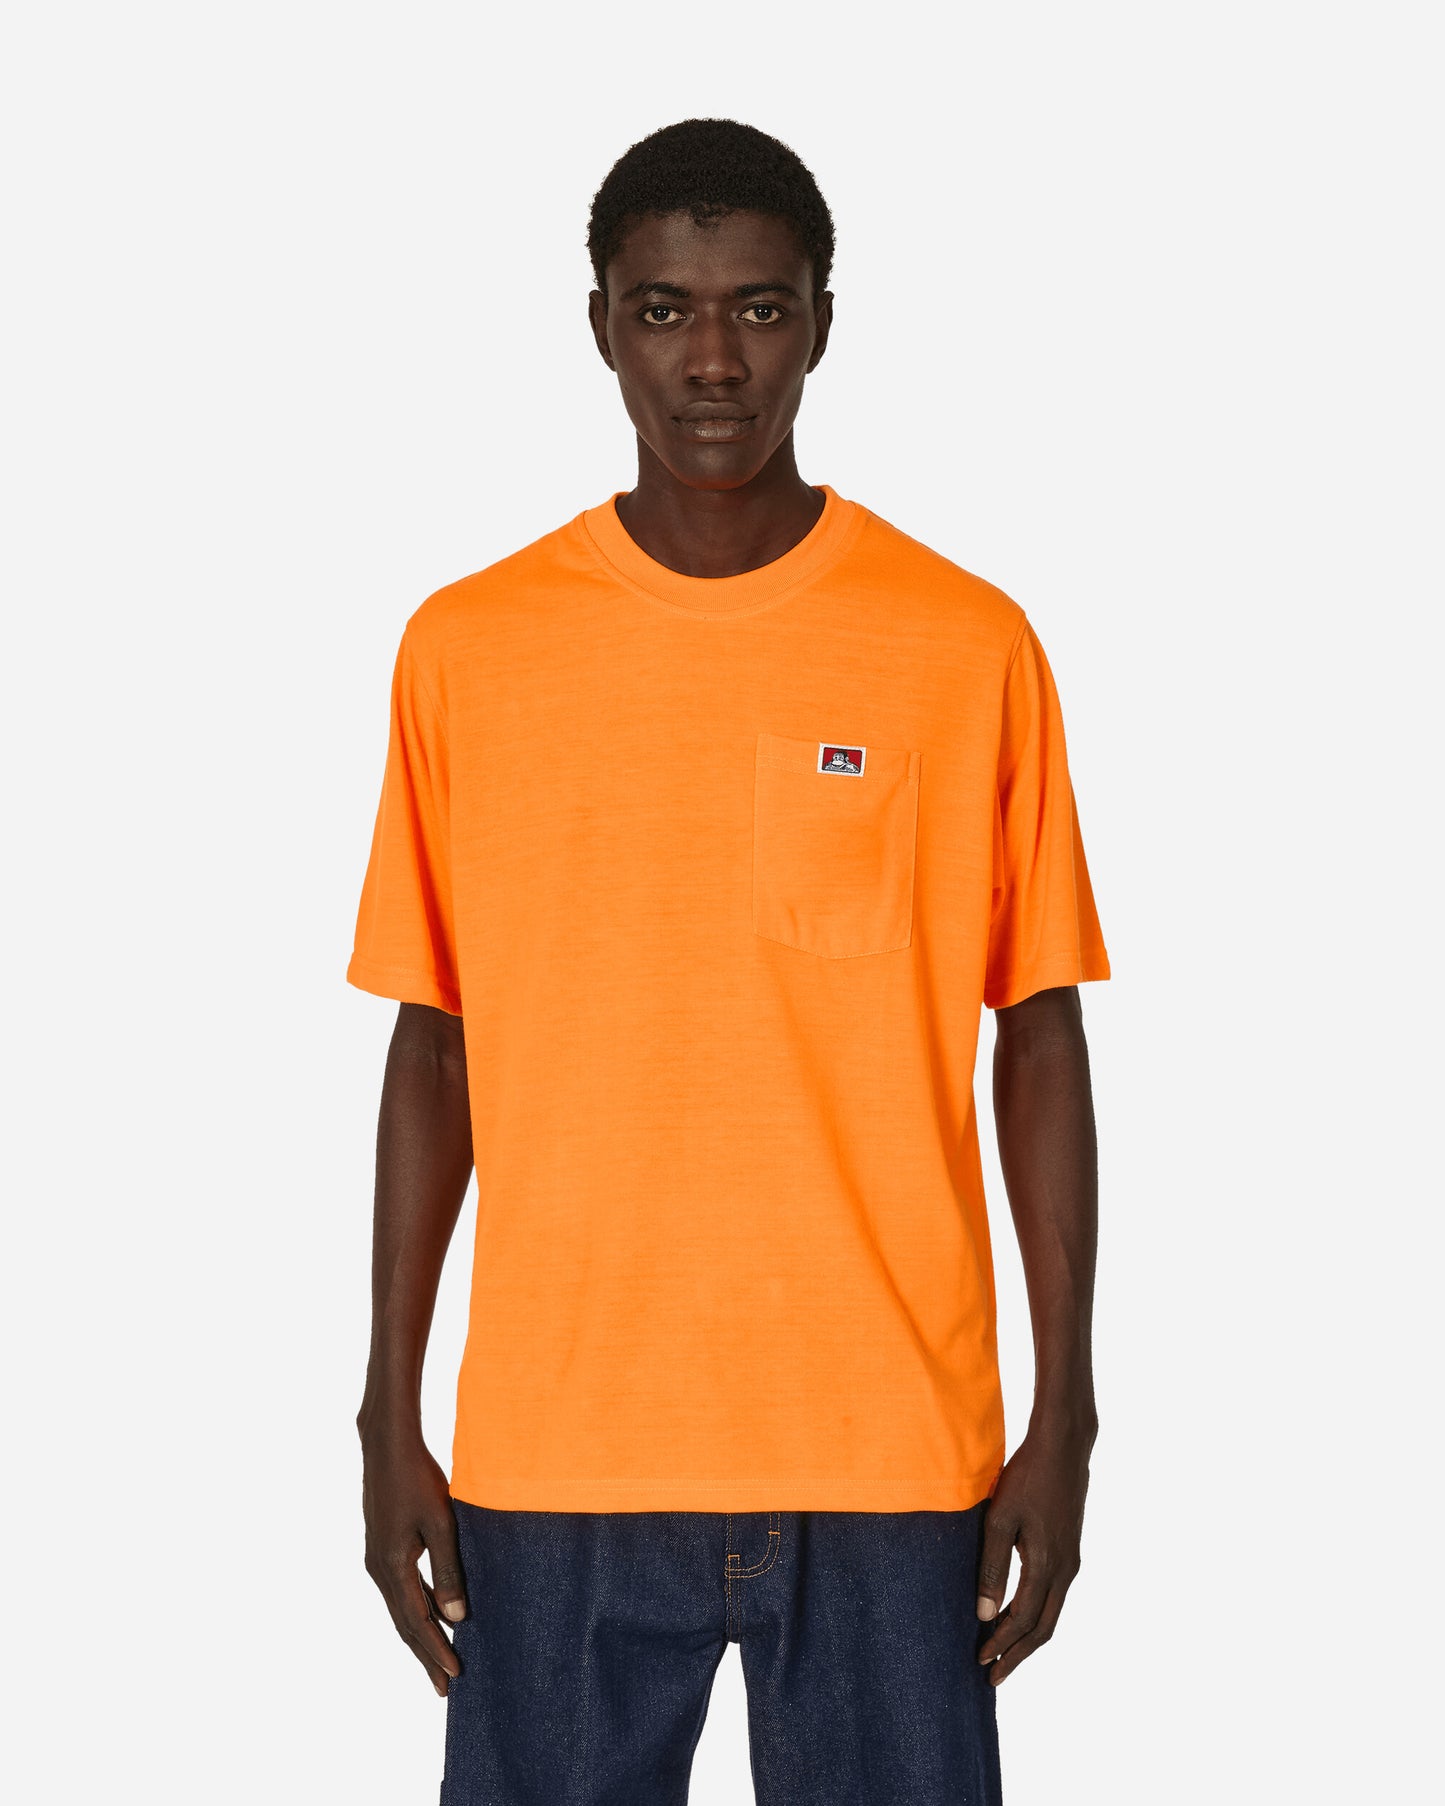 Ben Davis Classic Label Ss Pkt T-Heavyduty Orange T-Shirts Shortsleeve BEN916 001